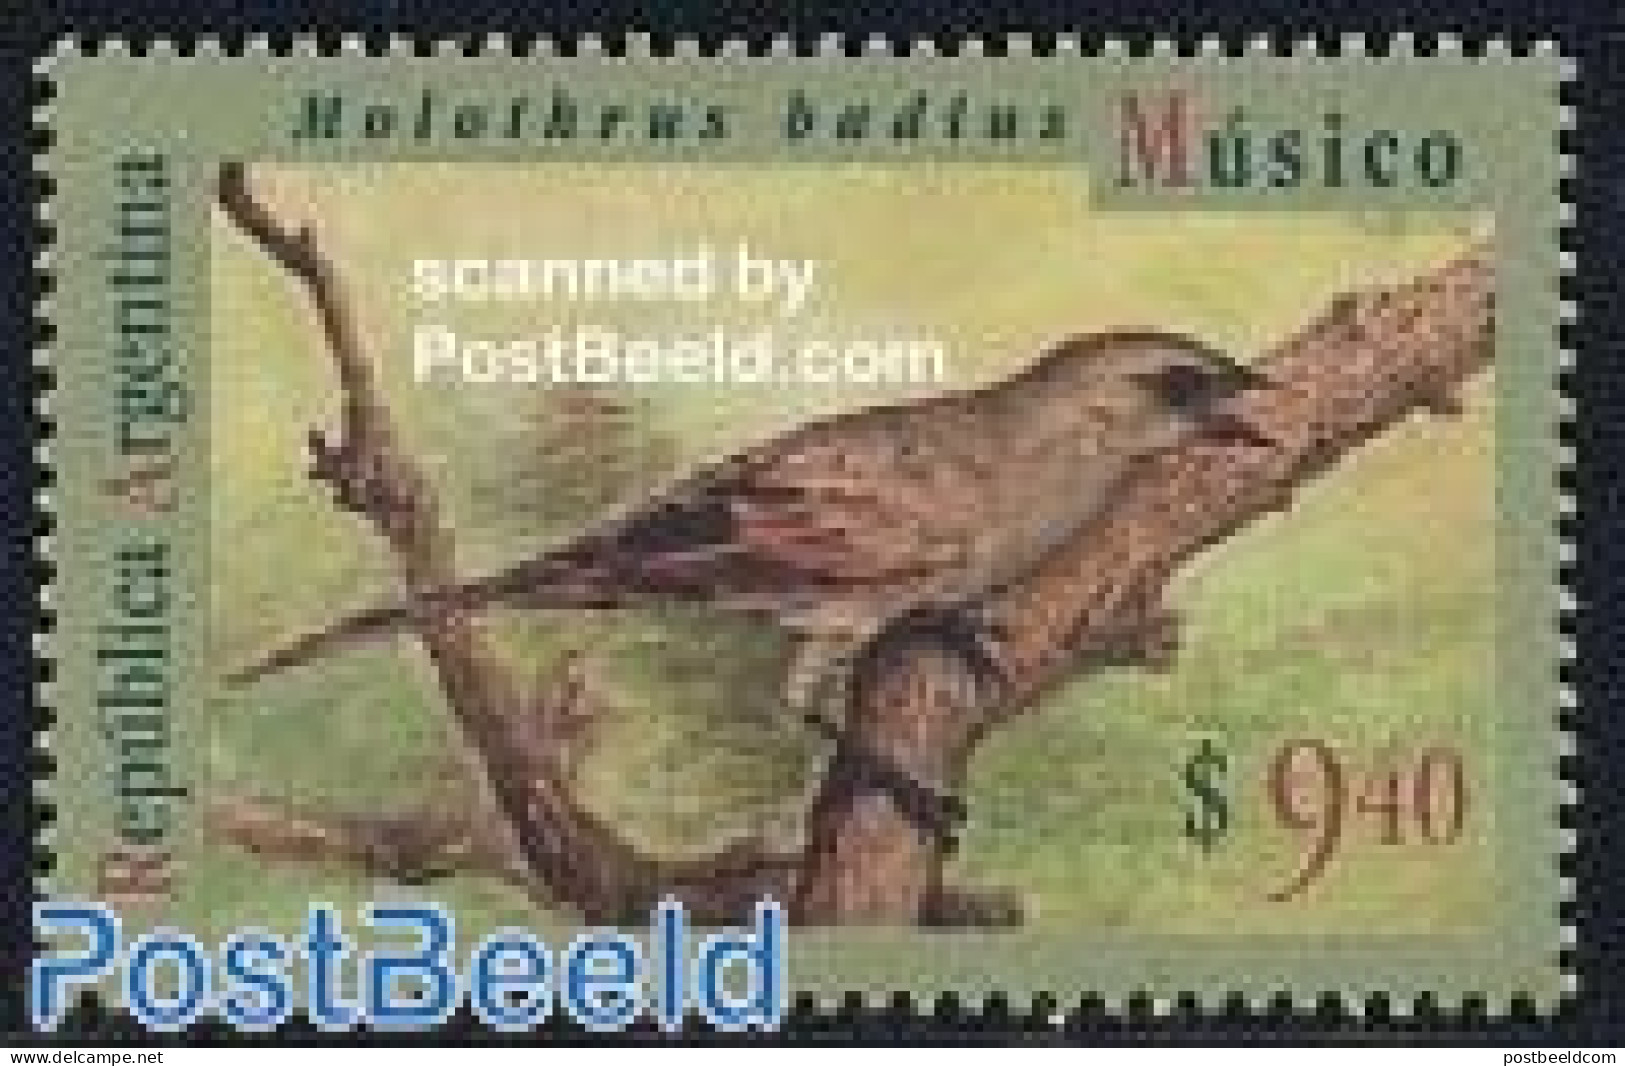 Argentina 1995 Bird 1v 9.40P, Mint NH, Nature - Birds - Unused Stamps